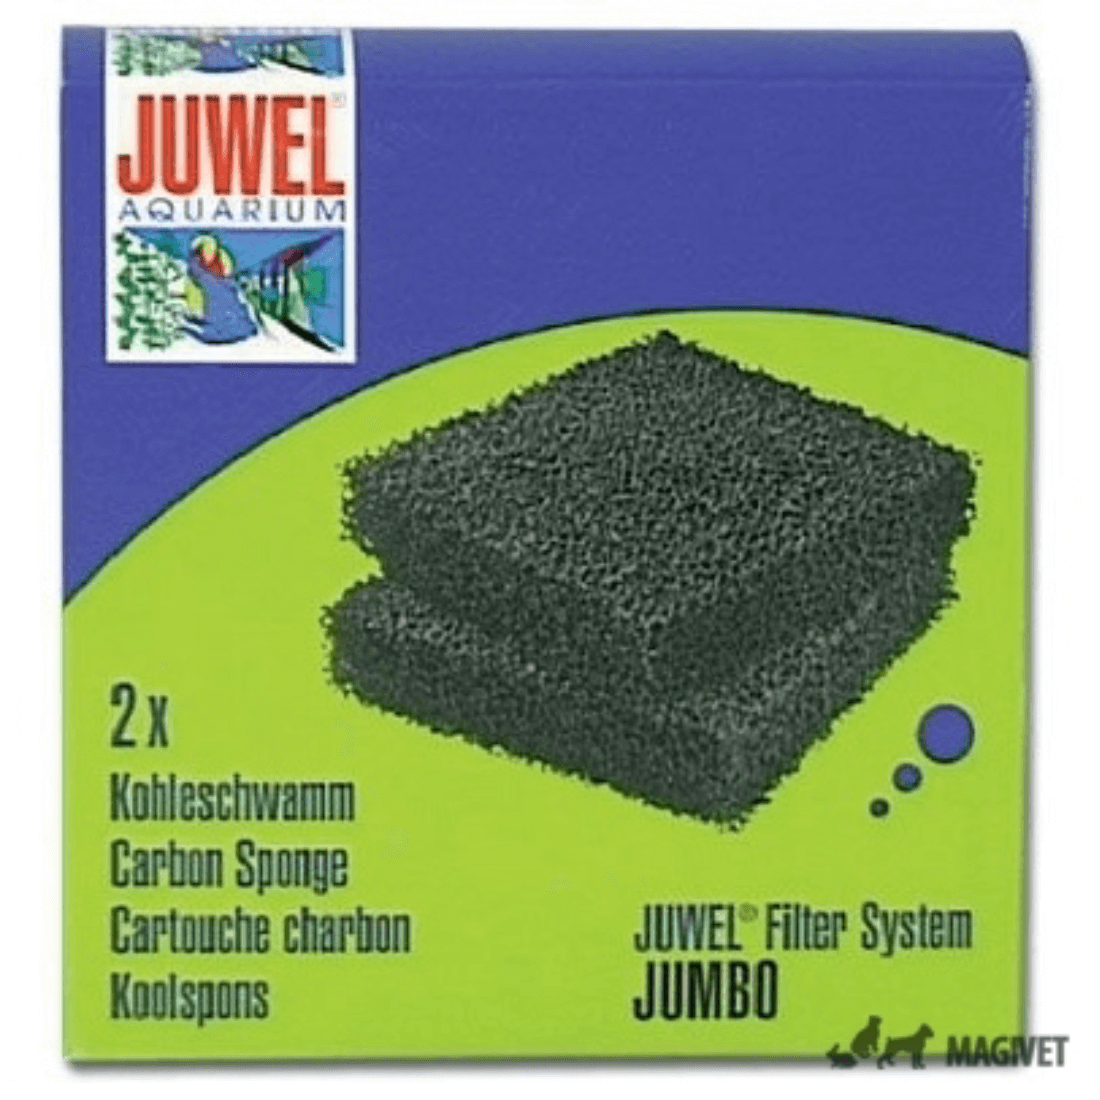 Rezerva material filtrant JUWEL JUMBO CARBON 2buc